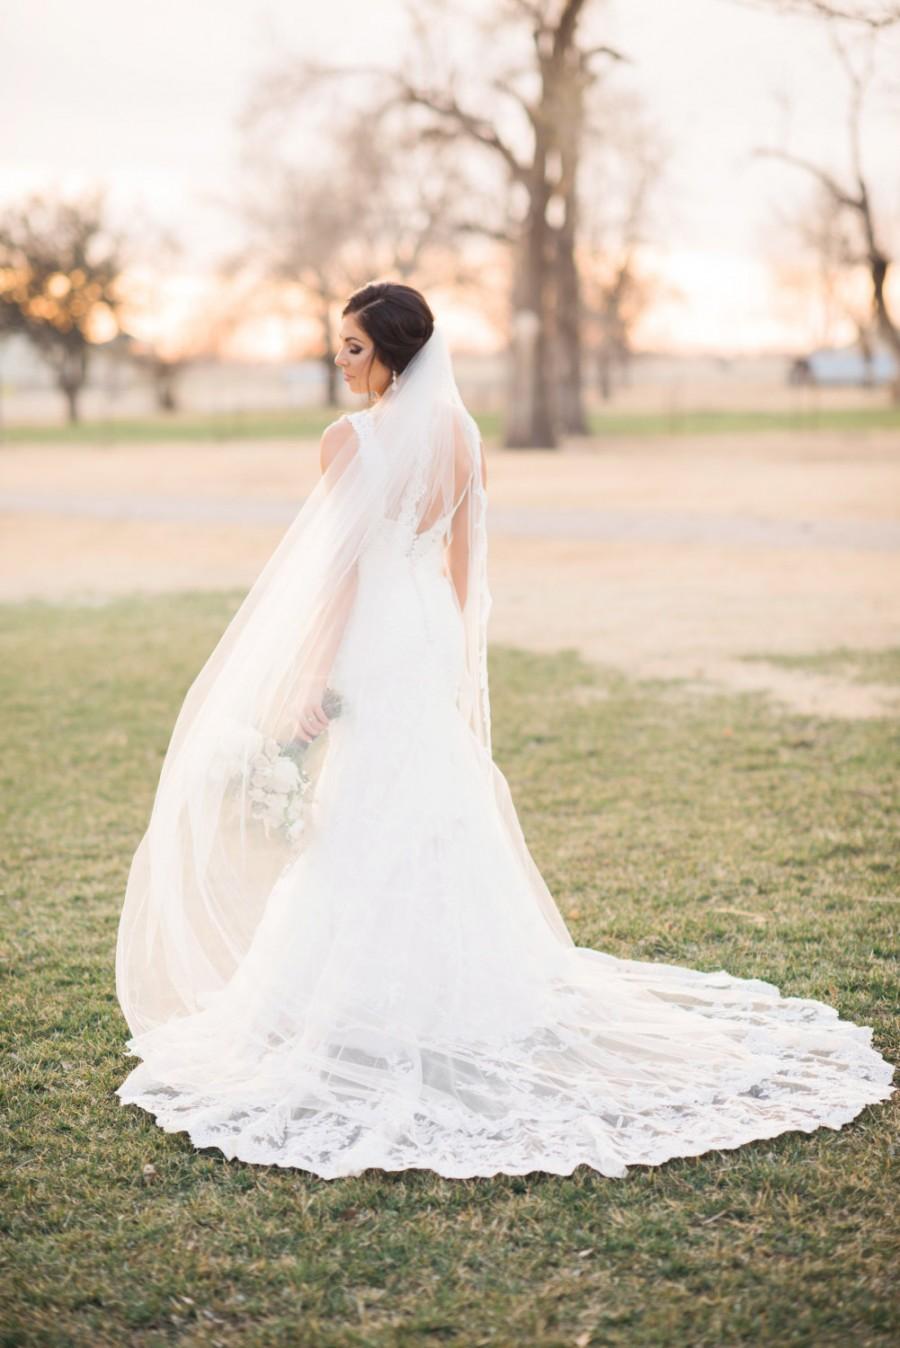 زفاف - Lace Wedding Veil